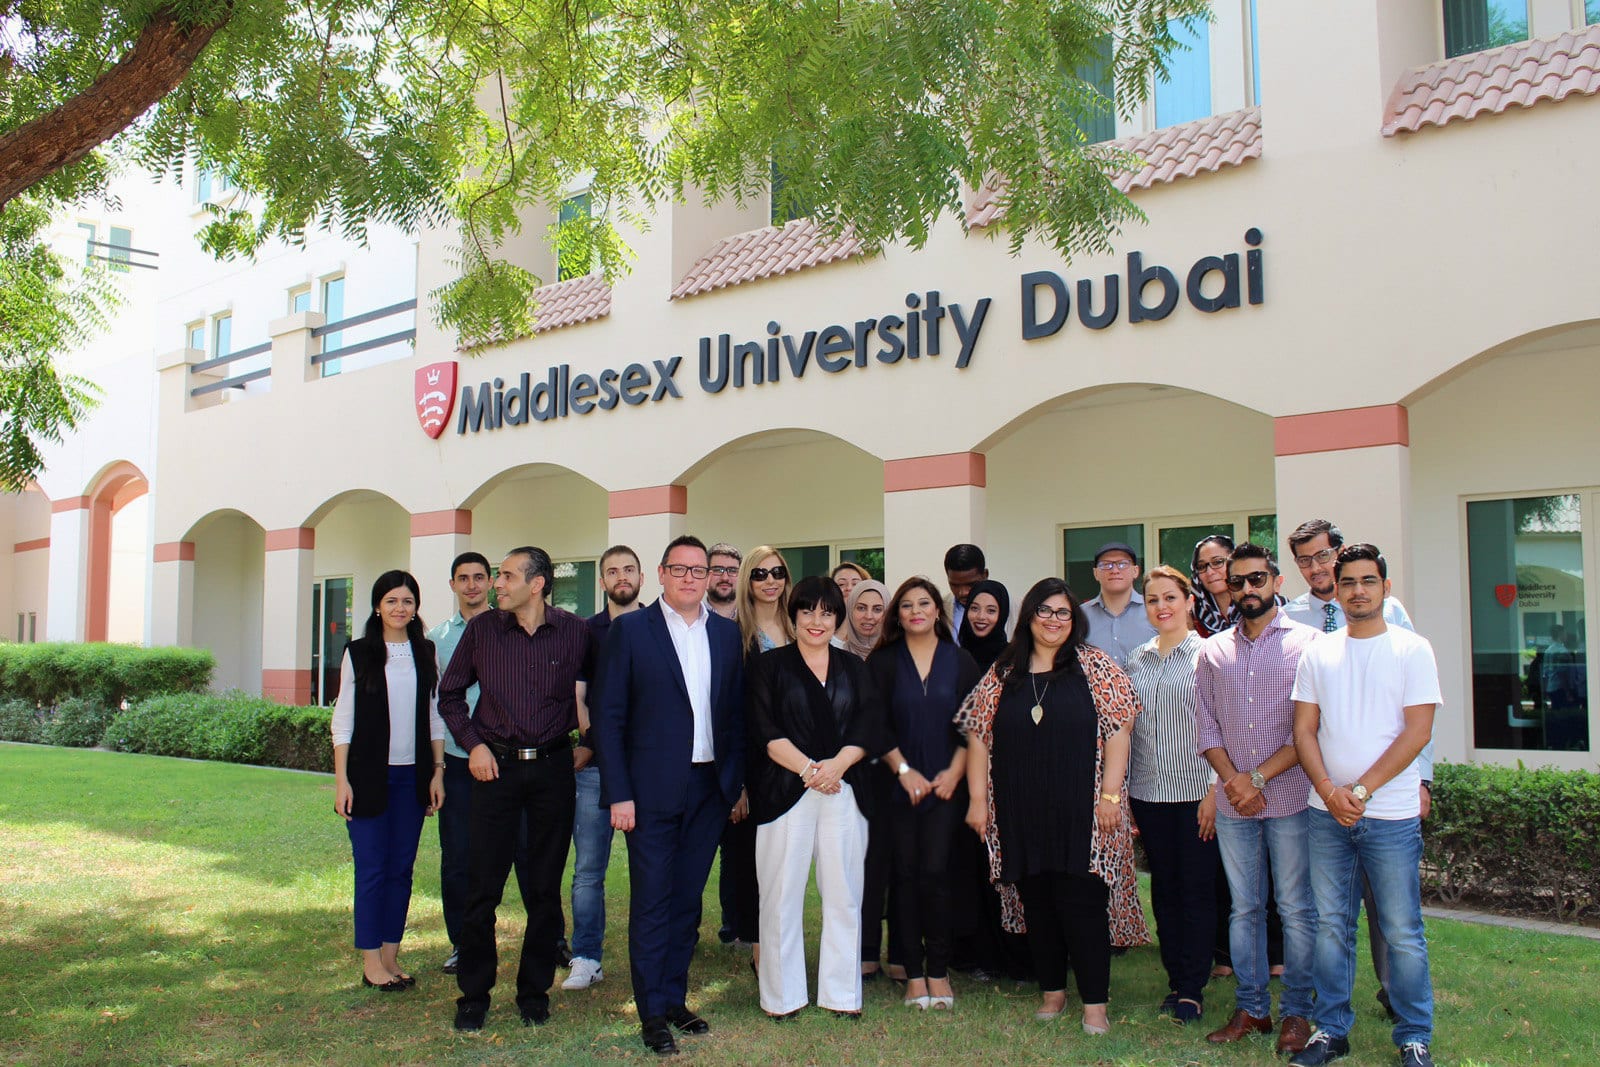 Middlesex University, Dubai